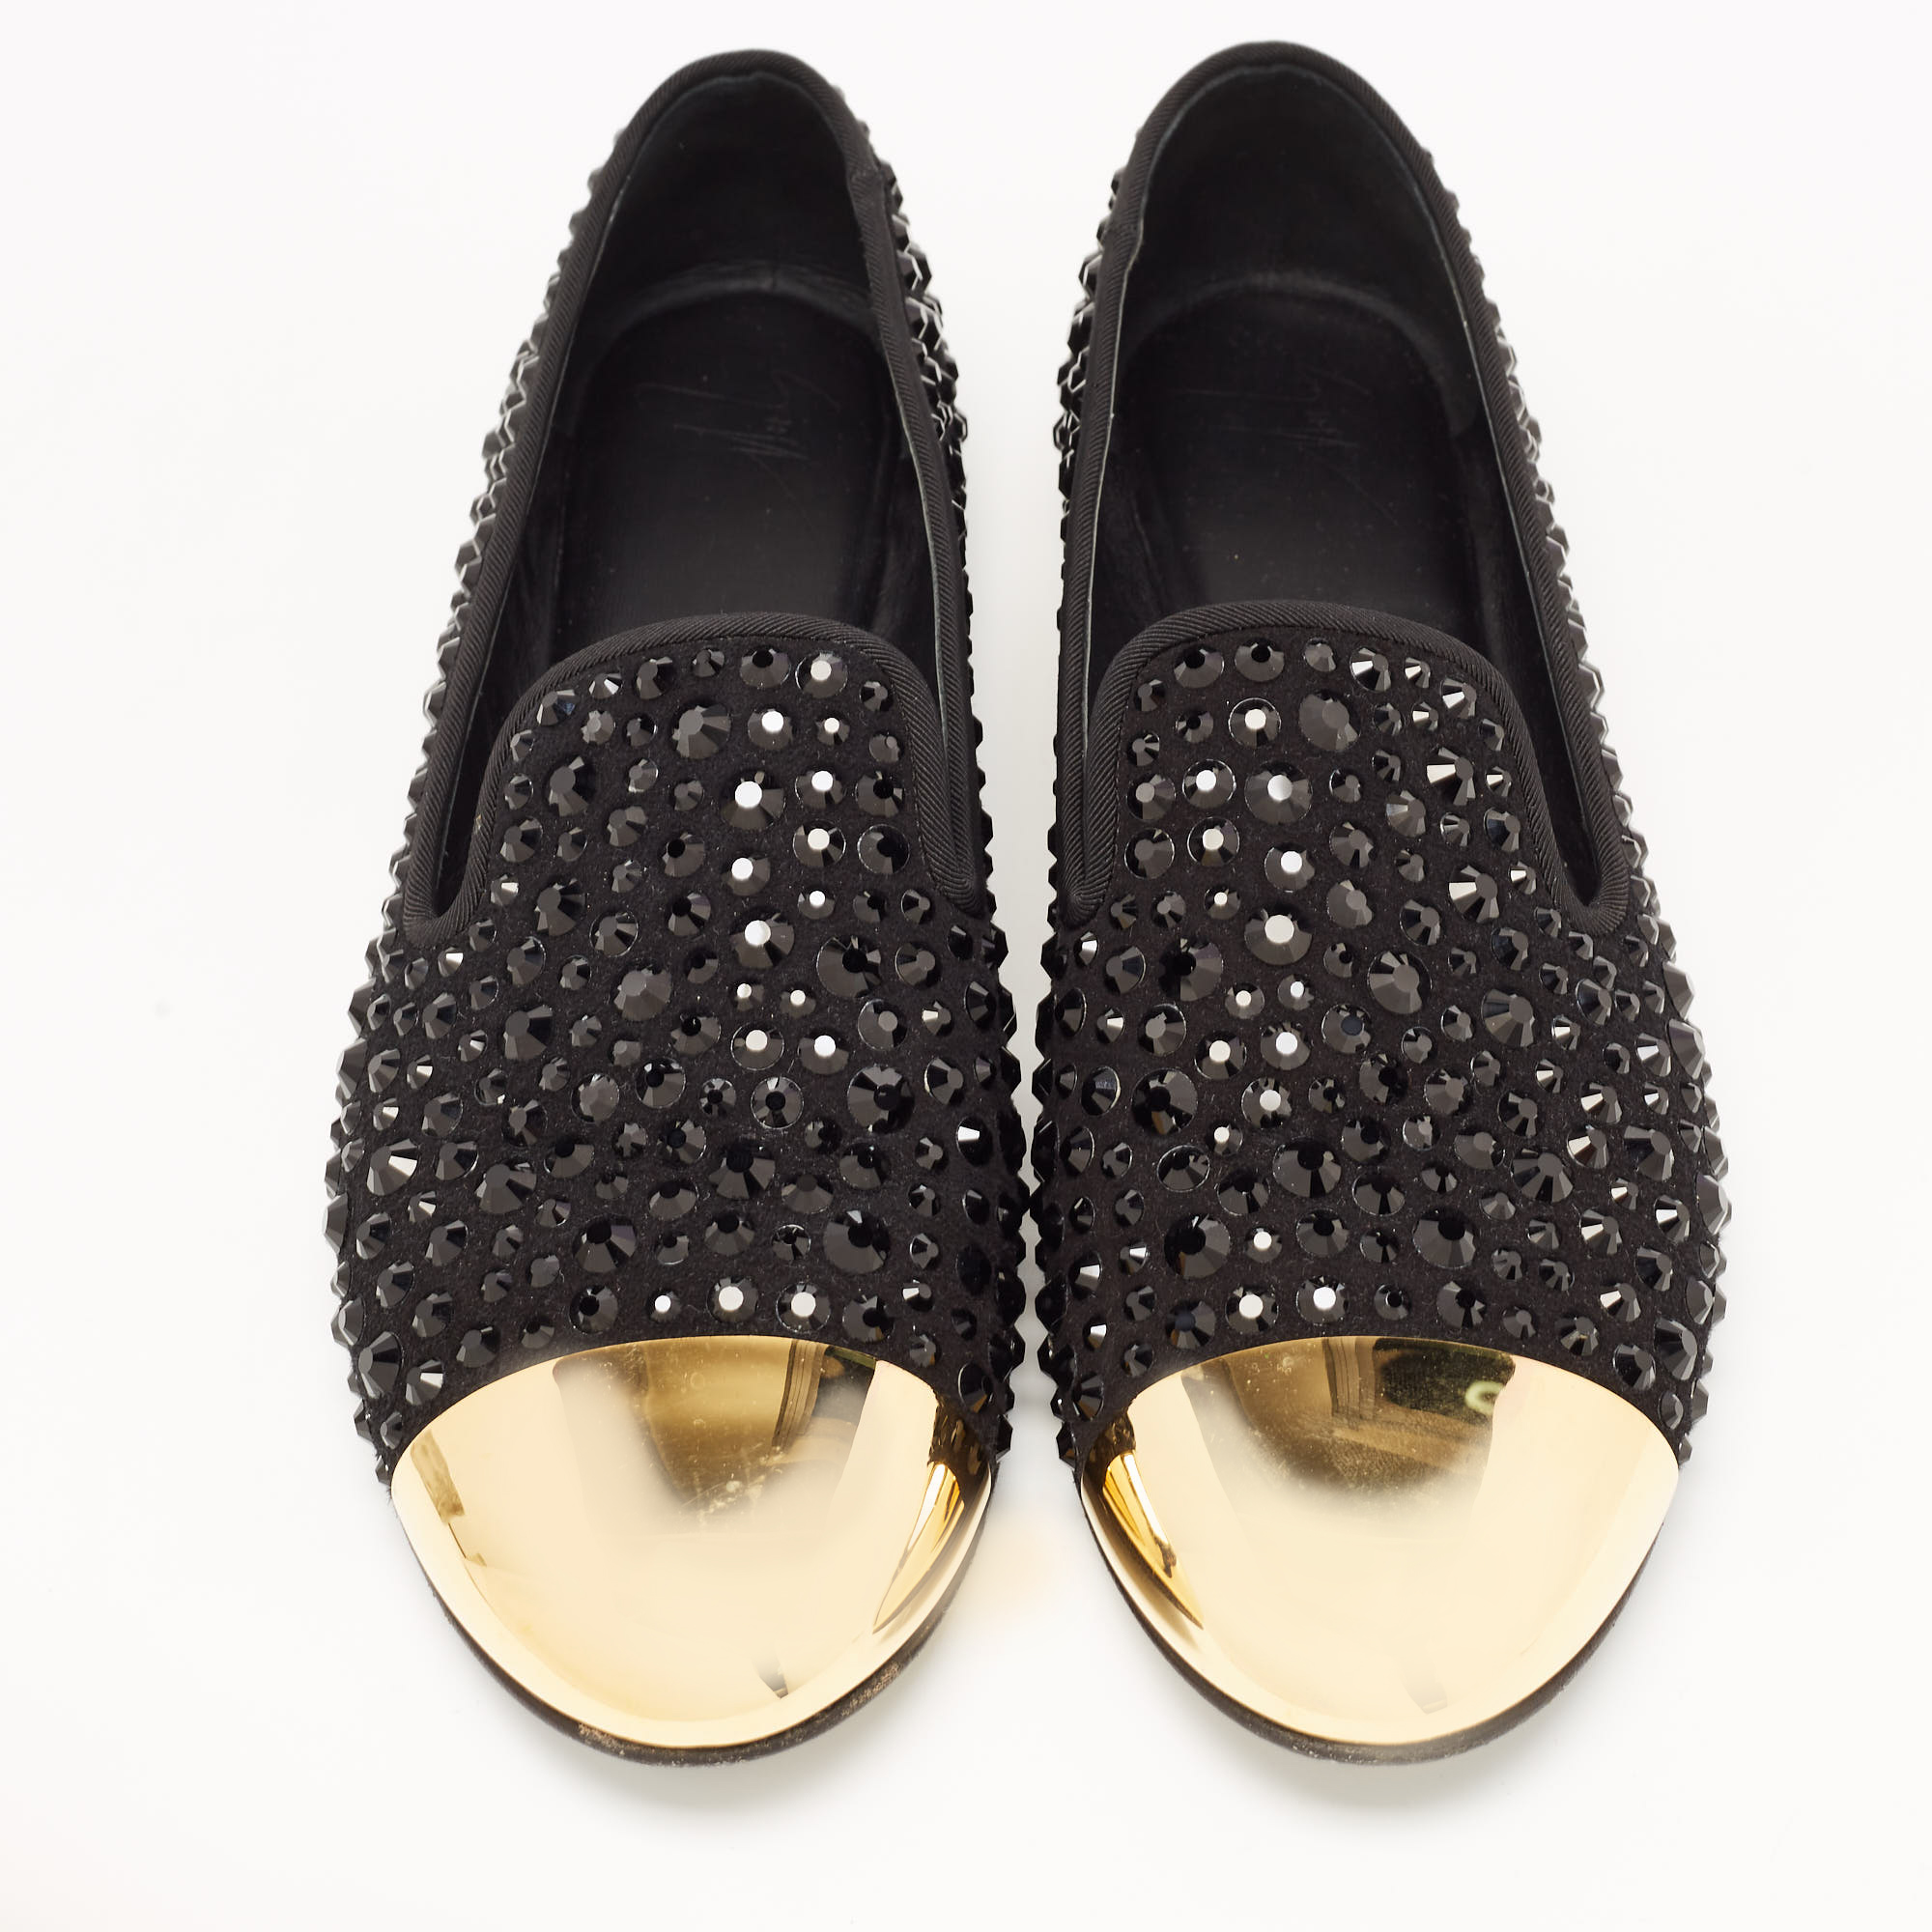 Giuseppe Zanotti Black/Gold Suede Cap Toe Crystals Embellished Smoking Slippers Size 39